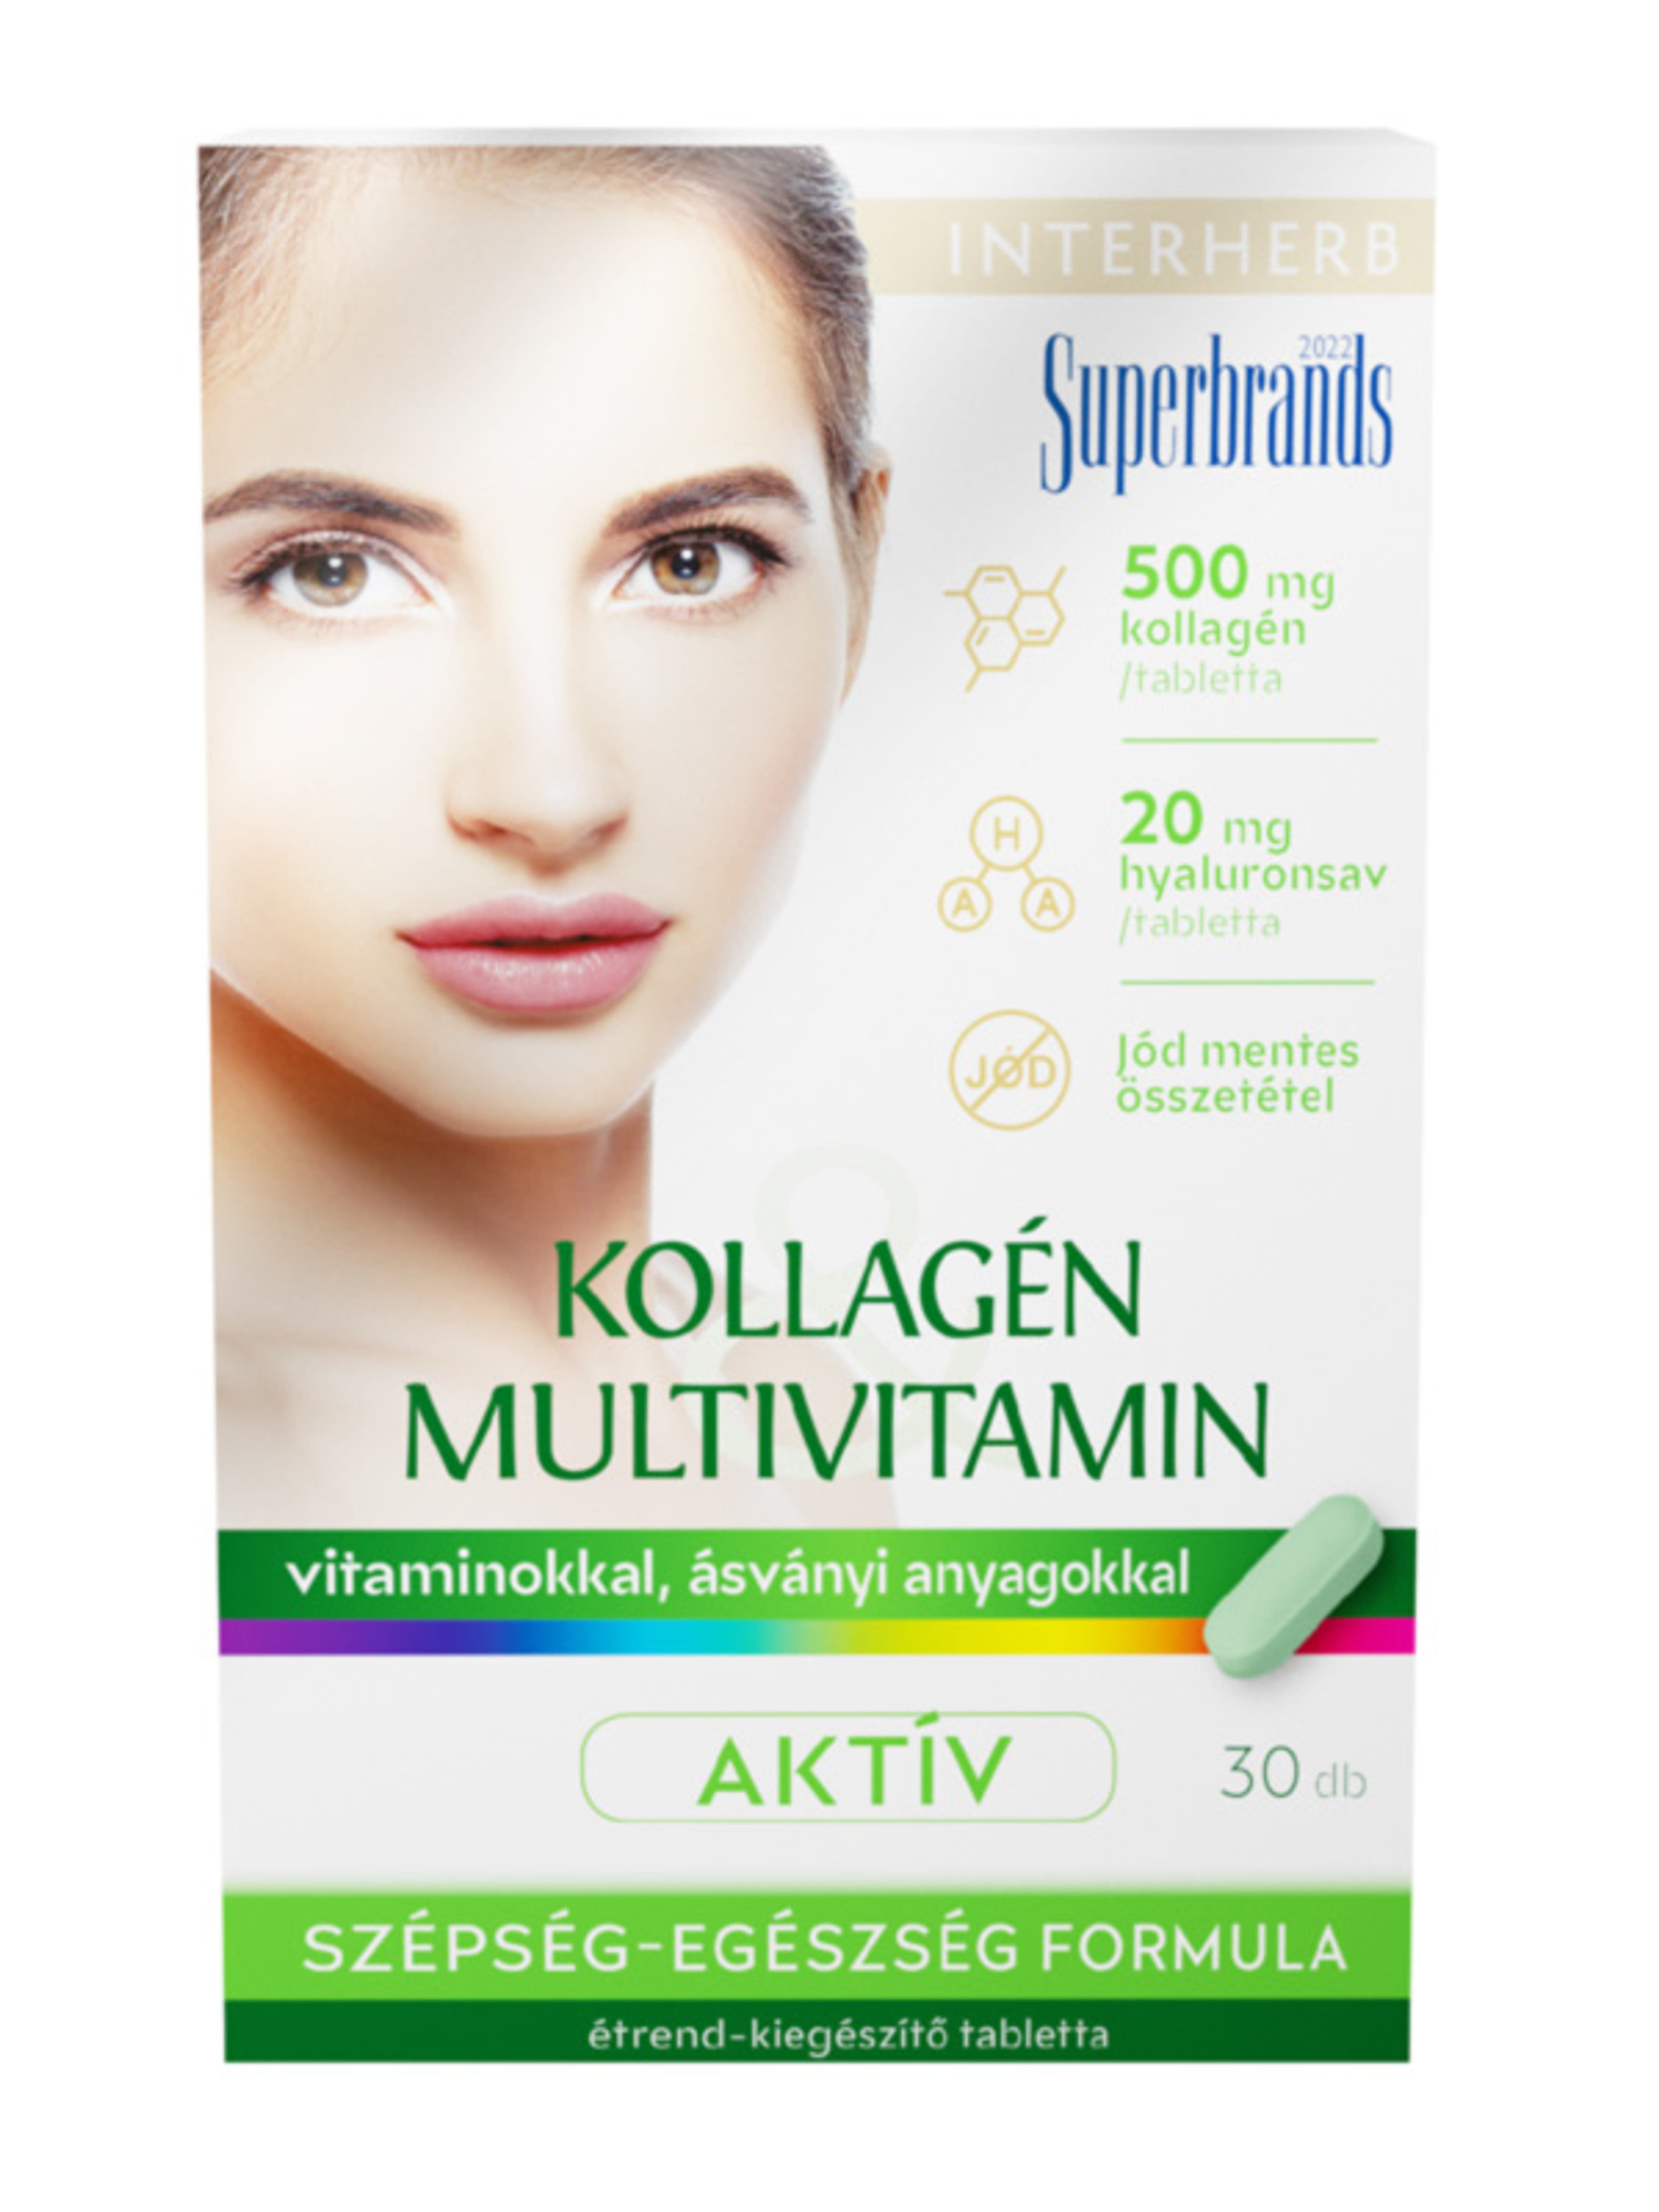 Interherb kollagén & multivitamin tabletta - 30 db